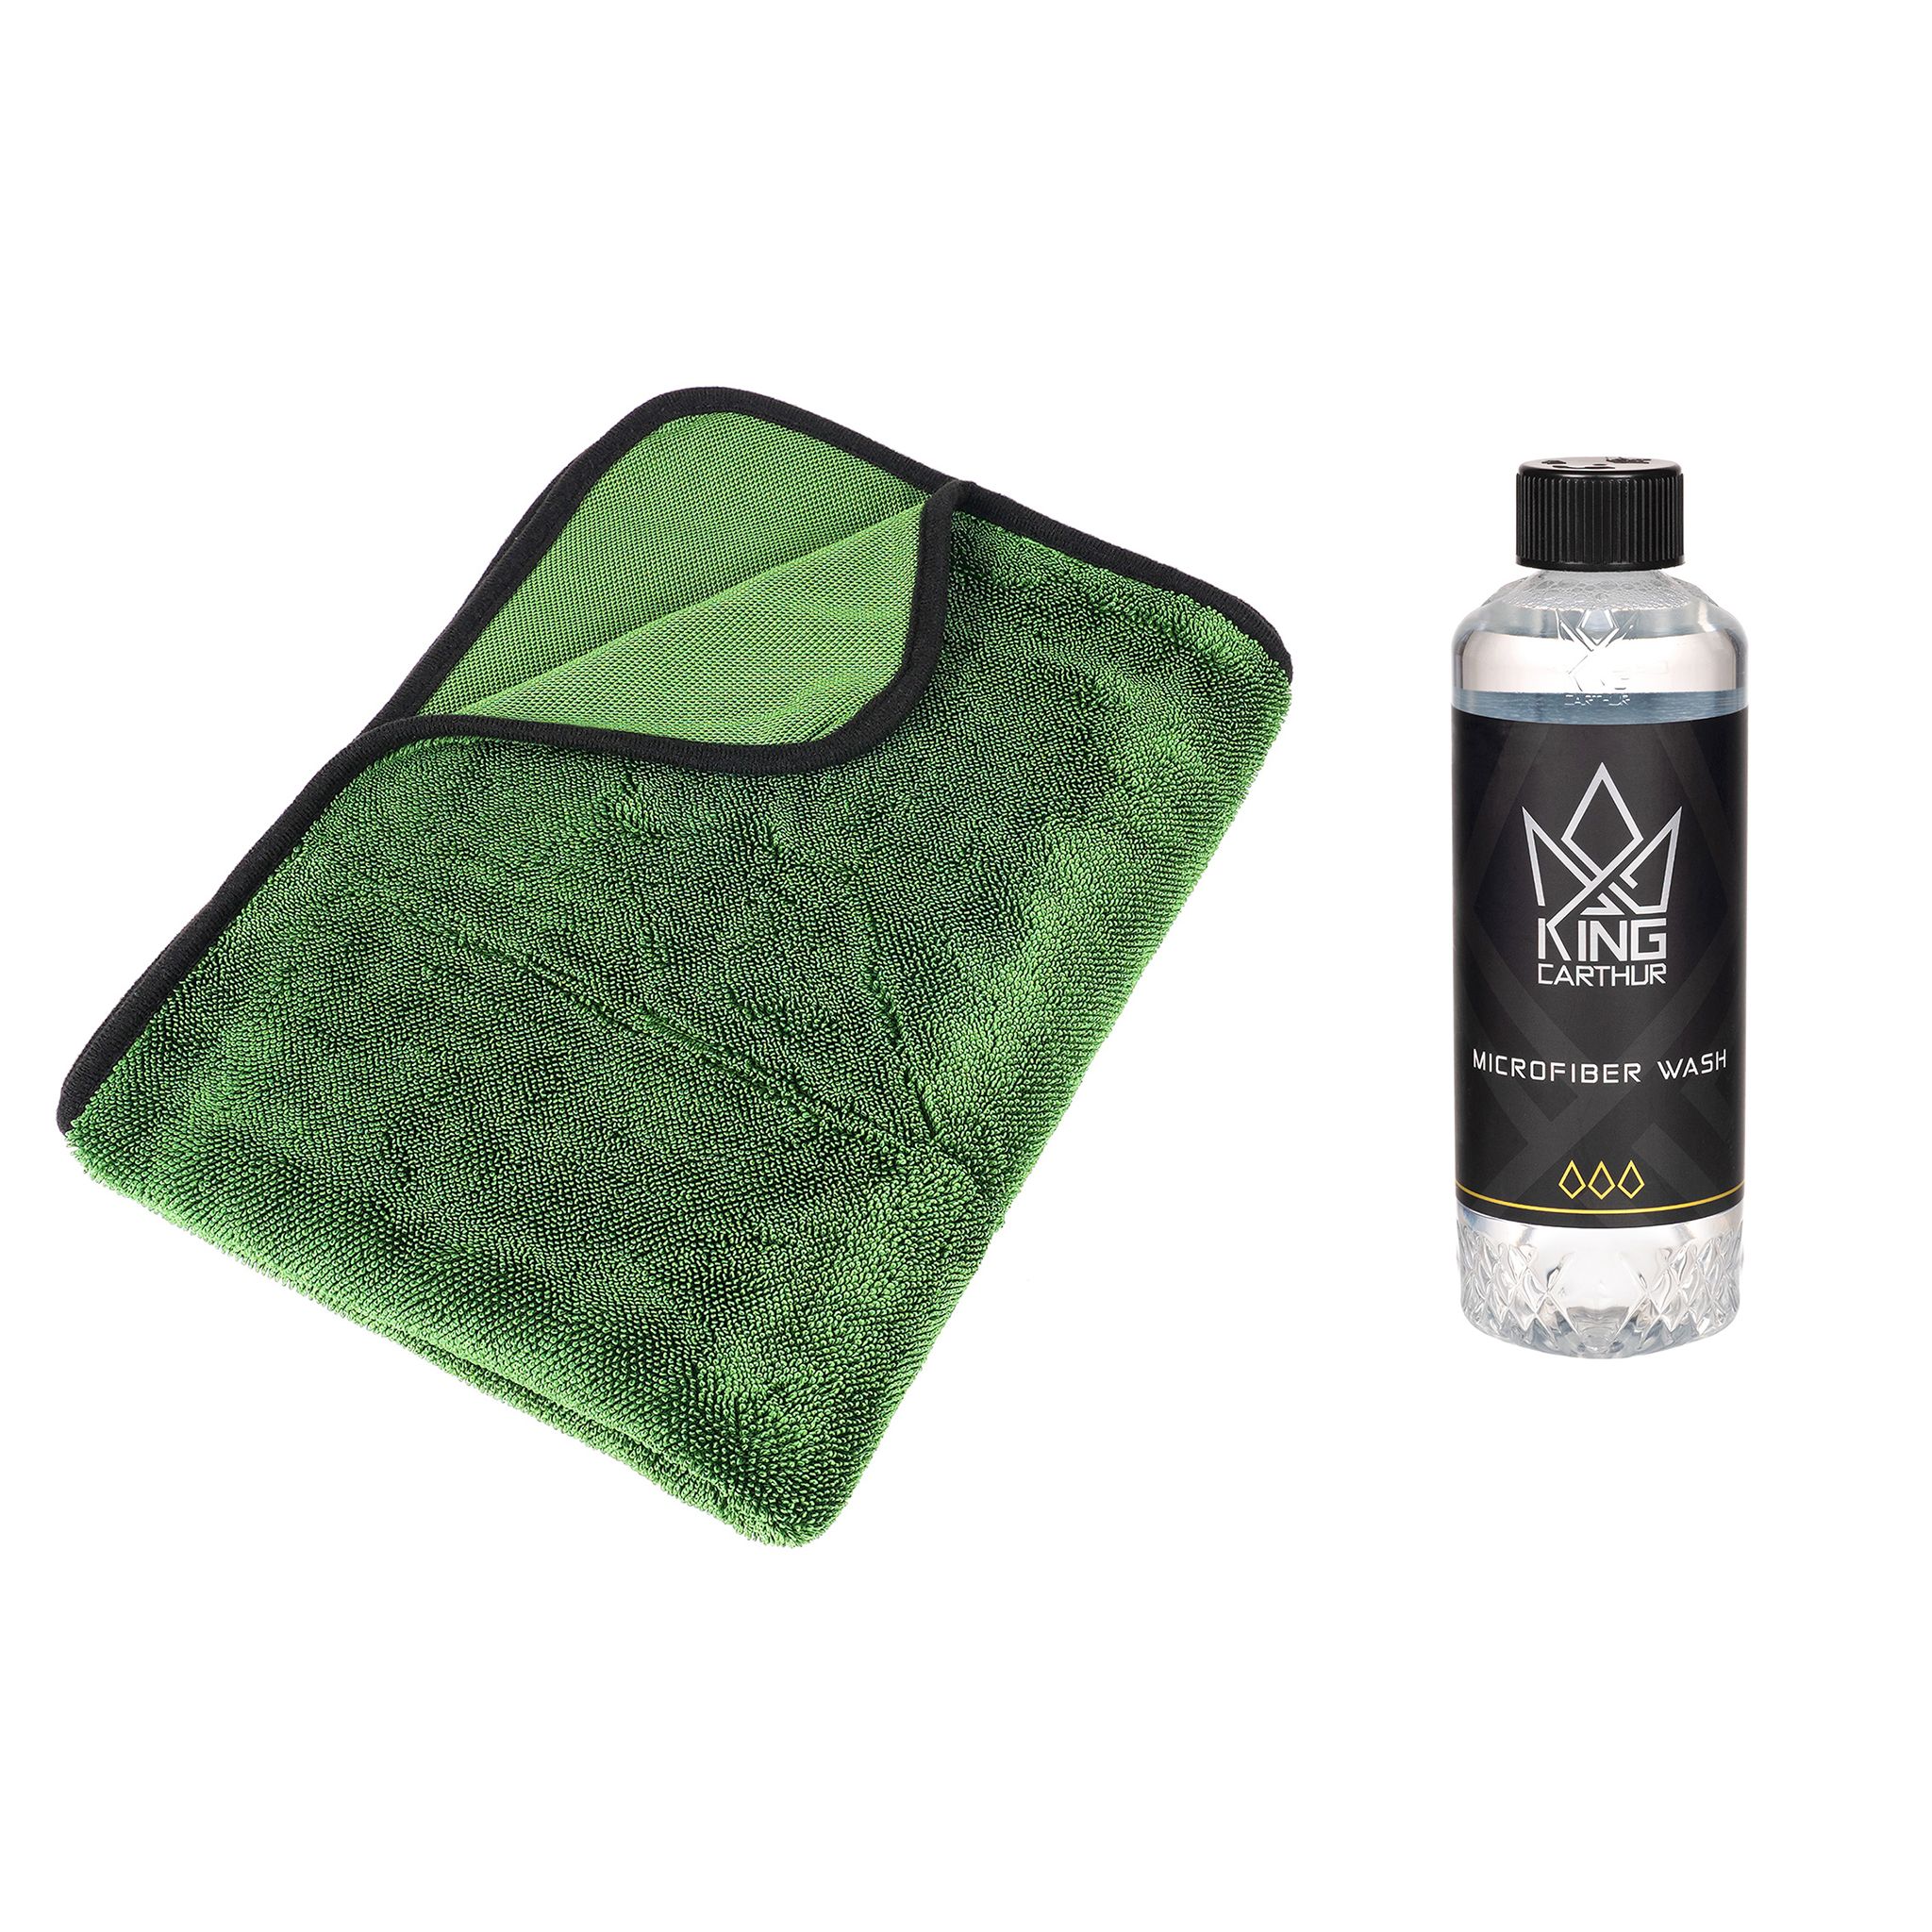 Tørkehåndkle King Carthur Green Jade, 1 stk + Mikrofiberrengjøring